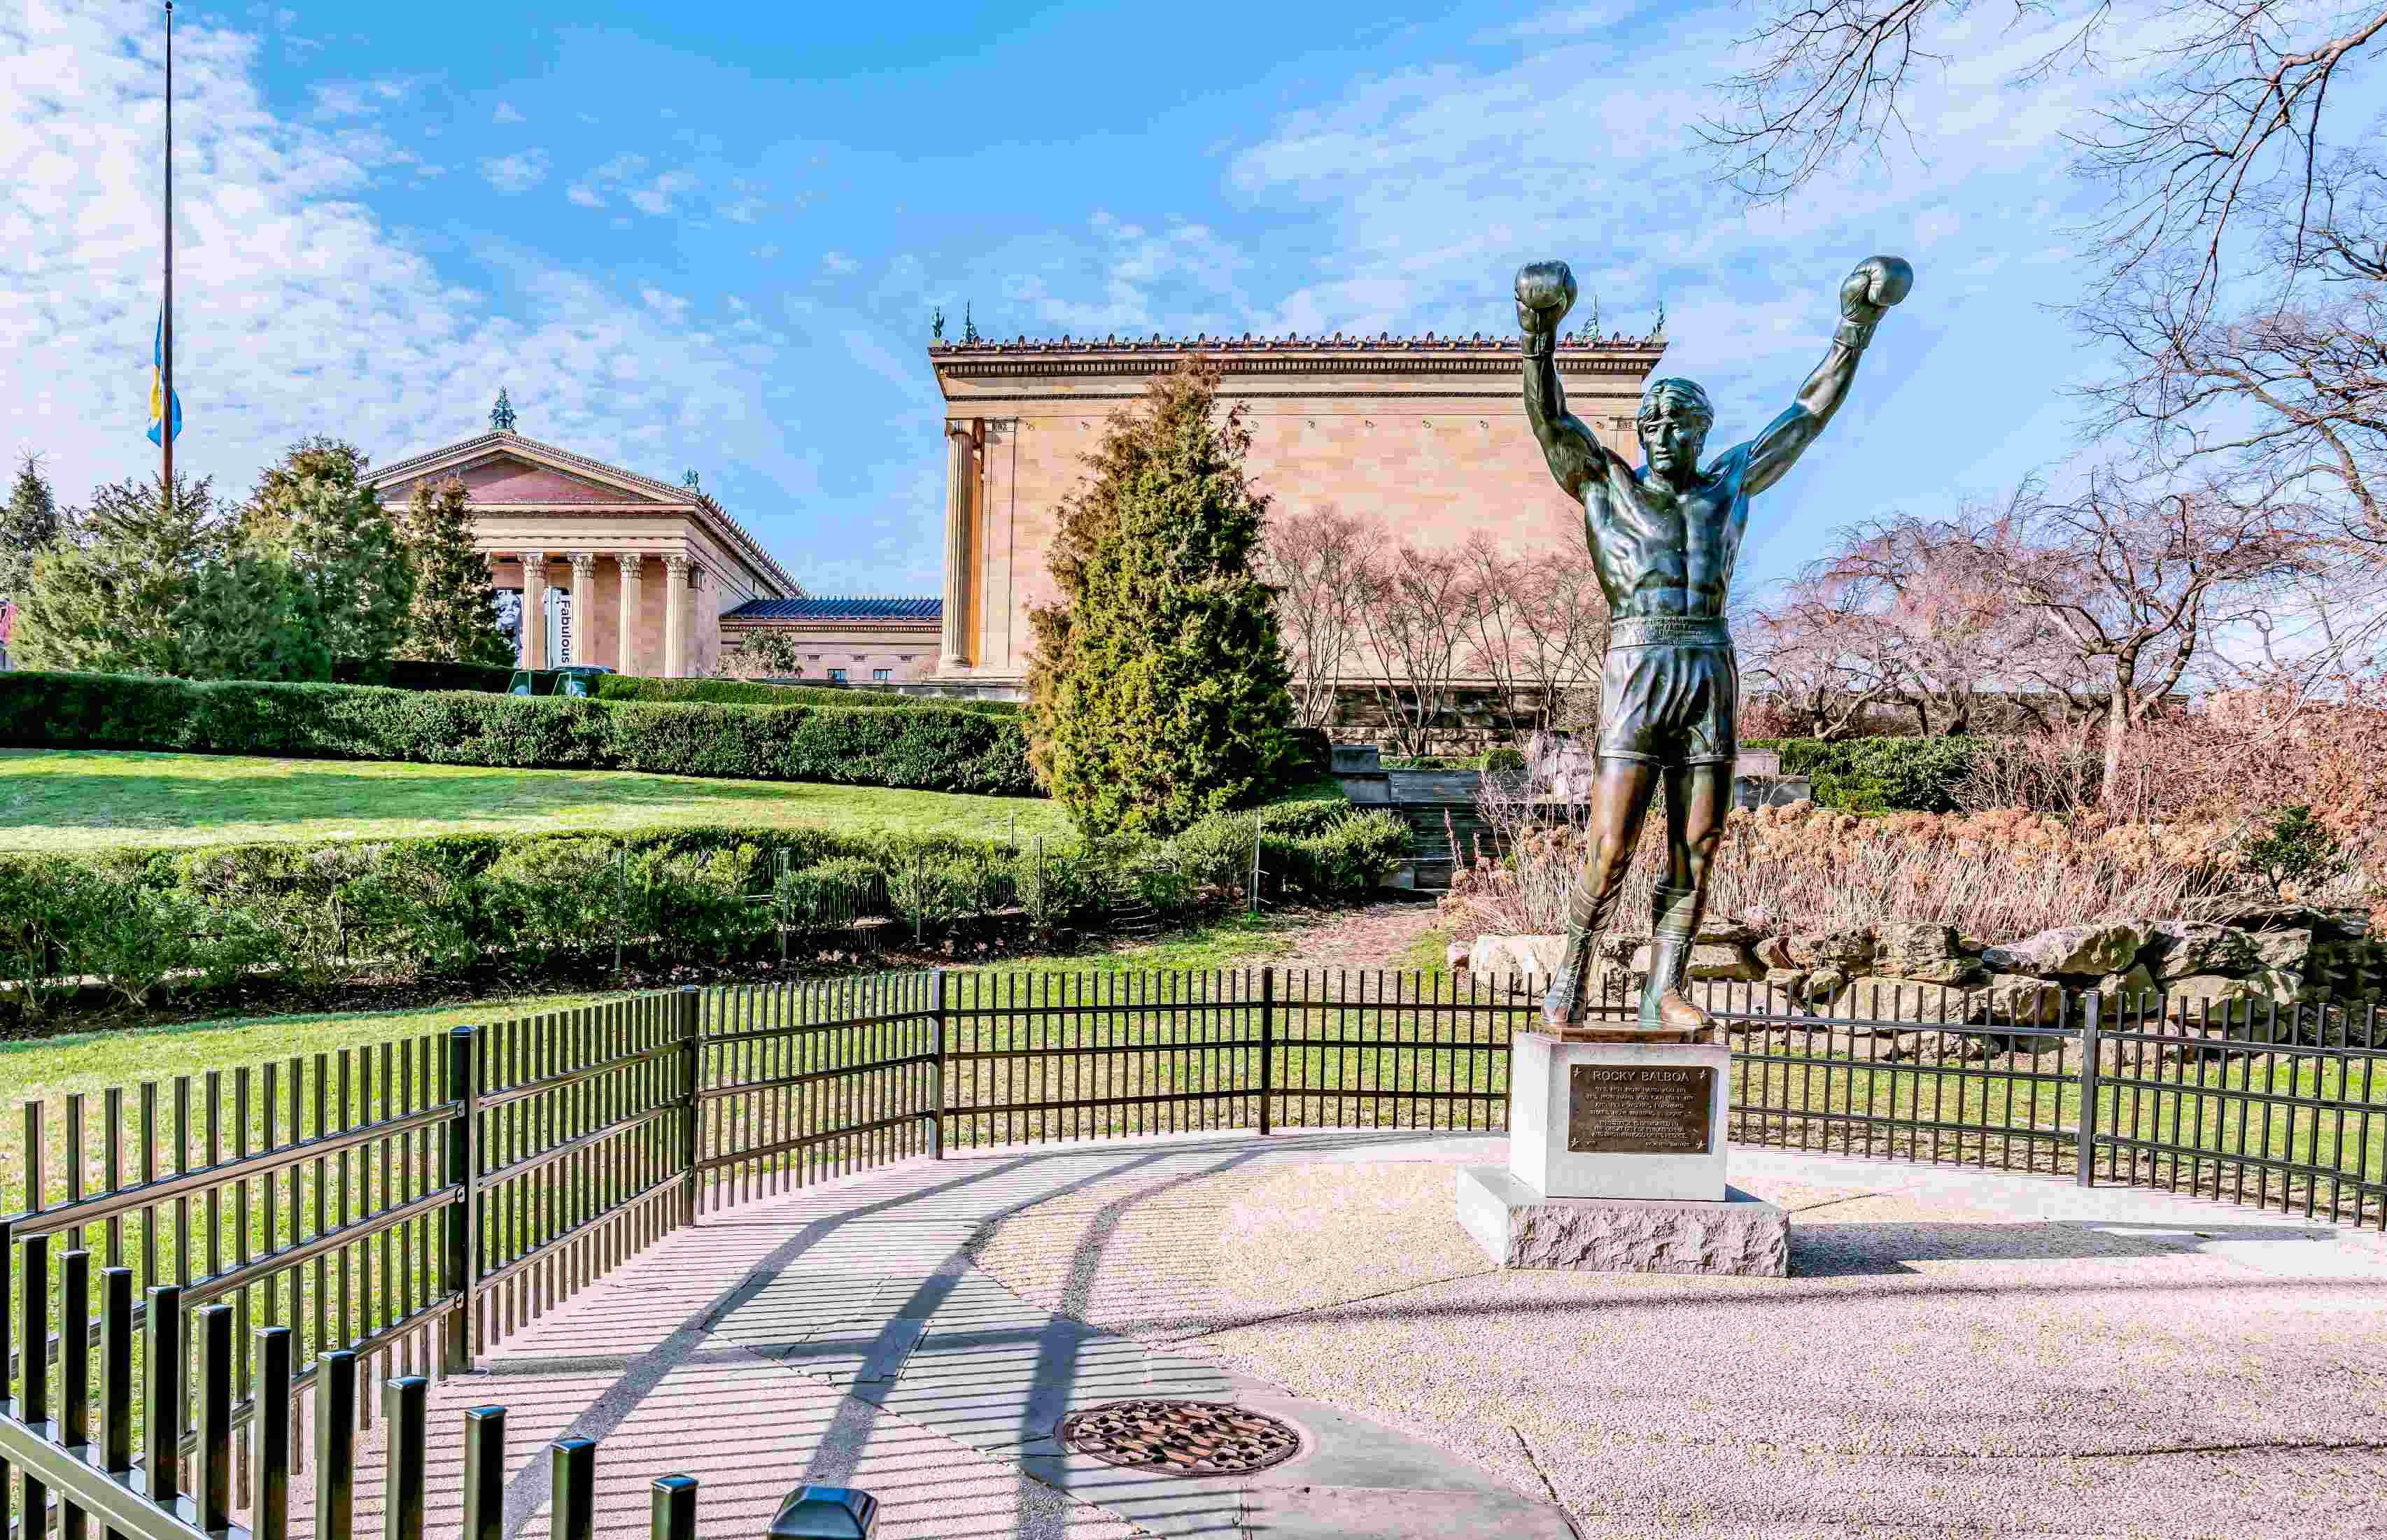 The Rocky statue, Philadelphia